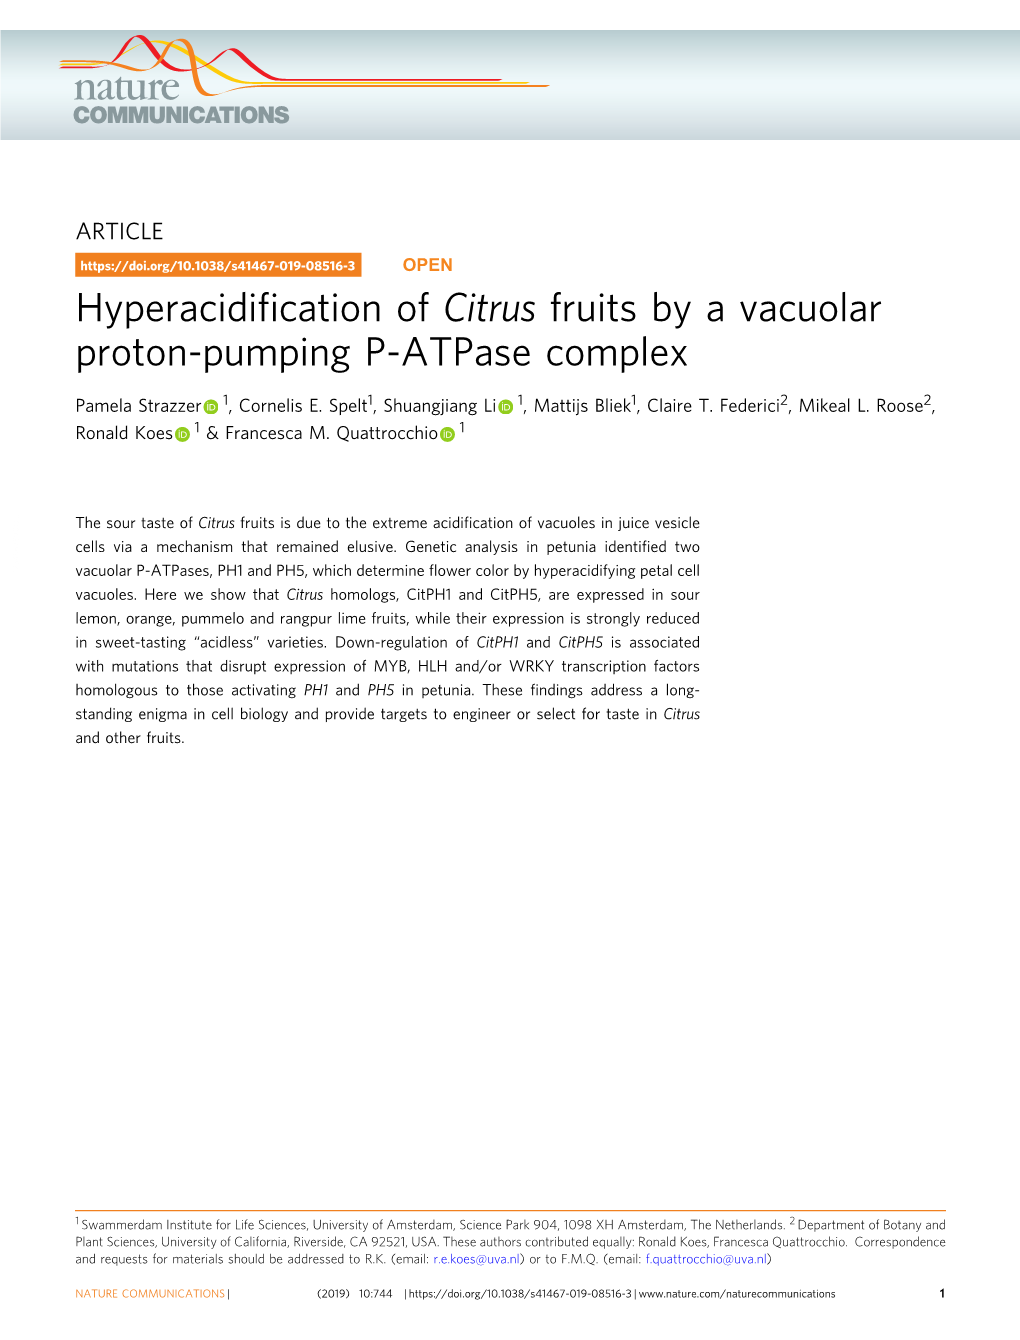 Hyperacidification of Citrus Fruits by a Vacuolar Proton-Pumping P-Atpase